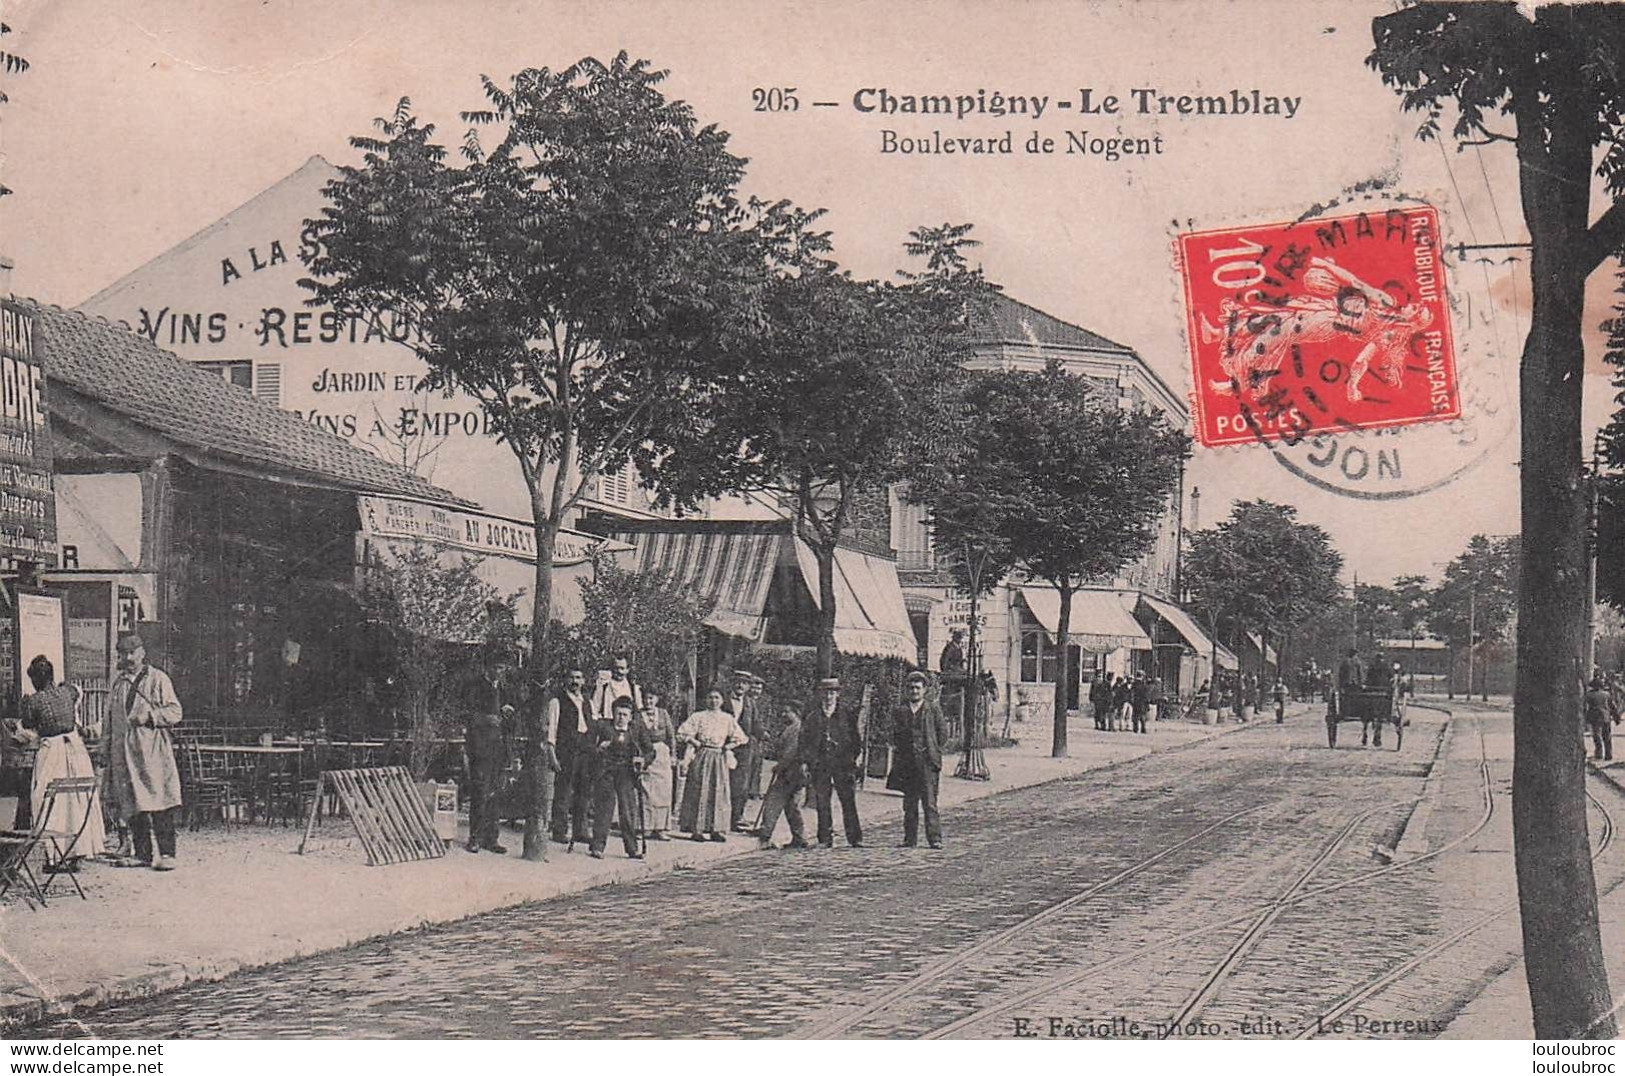 CHAMPIGNY LE TREMBLAY BOULEVARD DE NOGENT - Champigny Sur Marne